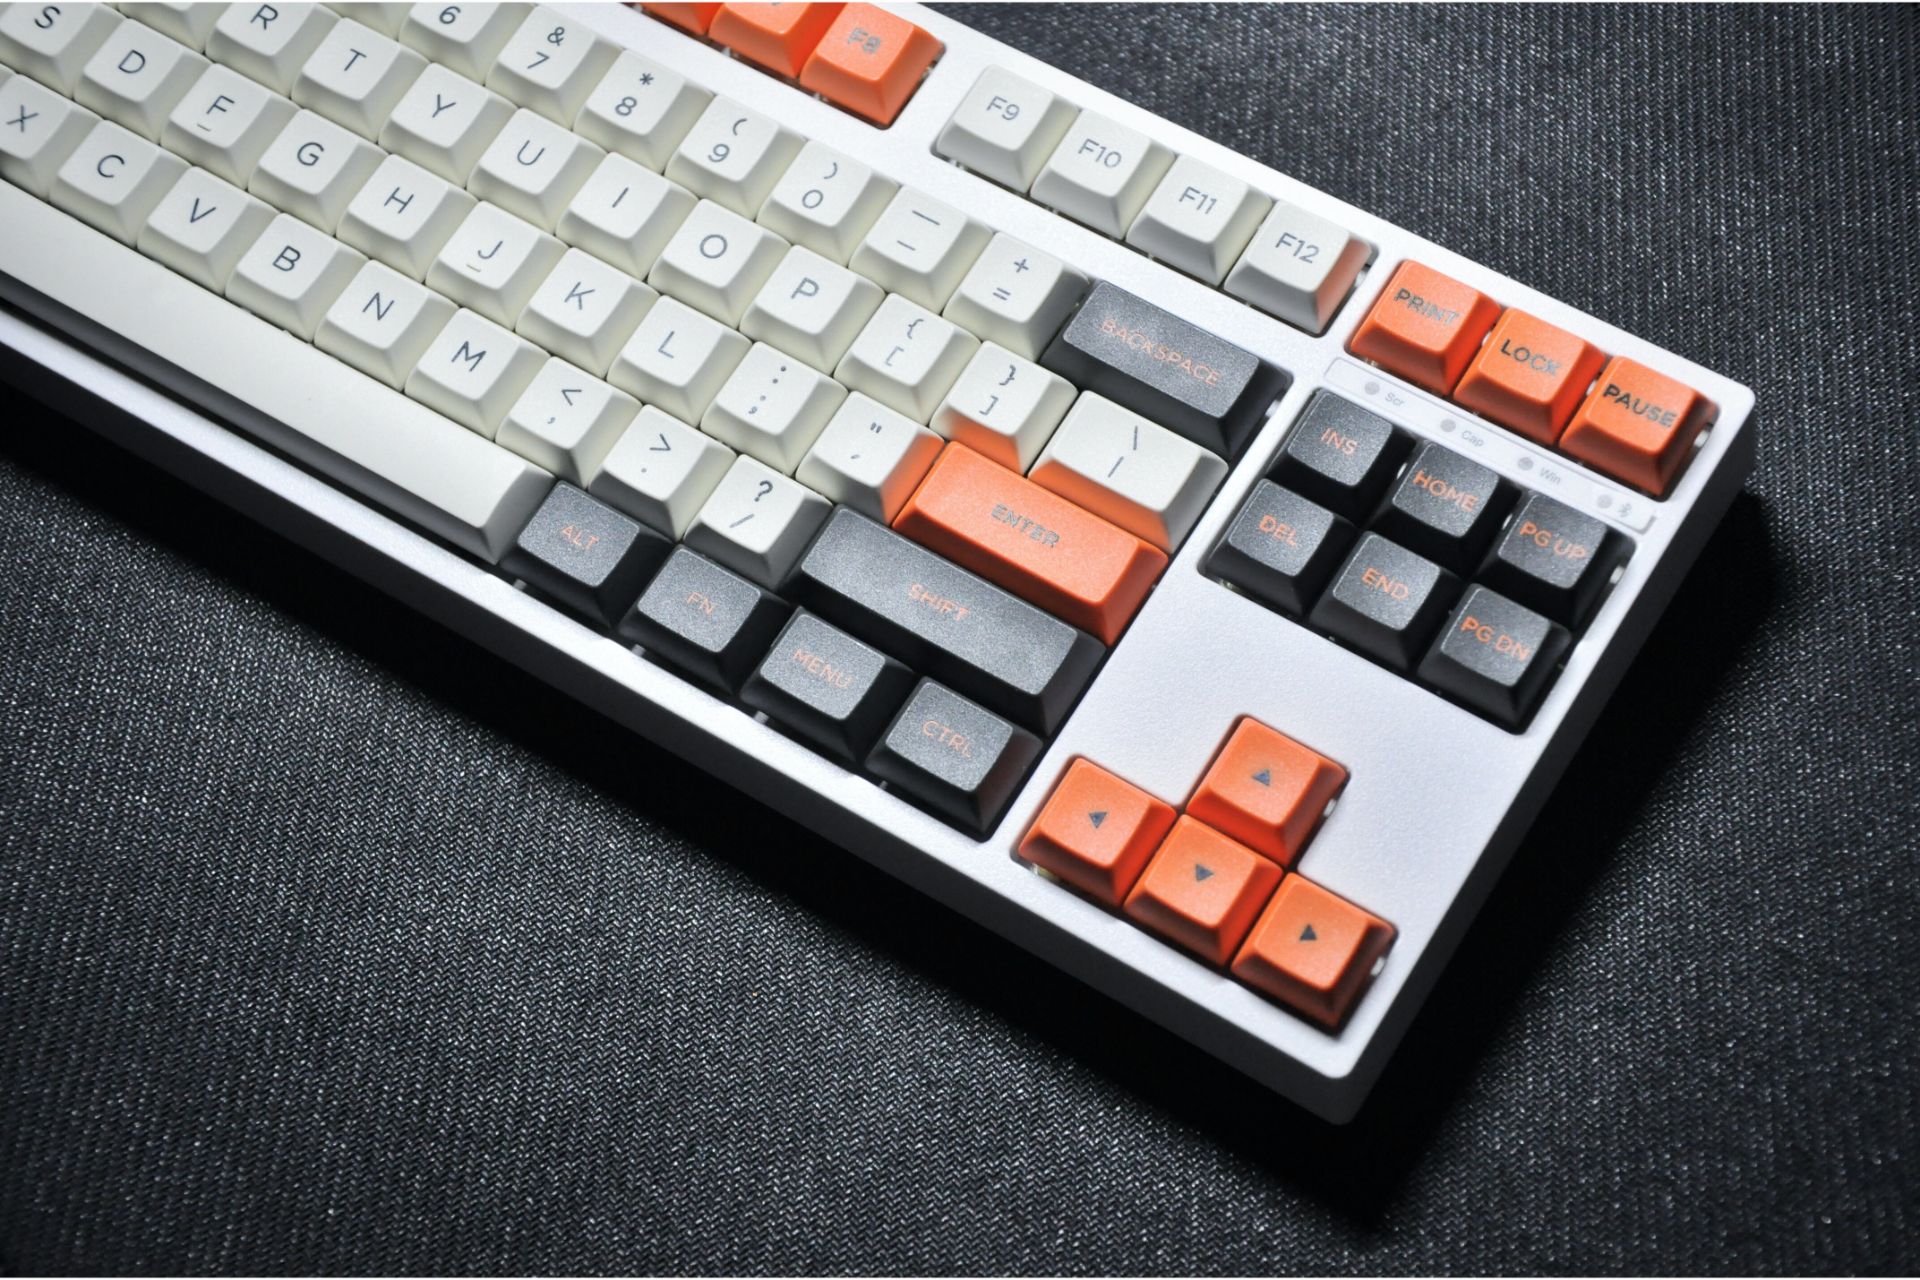 Keyboard with white, orange and black keys.